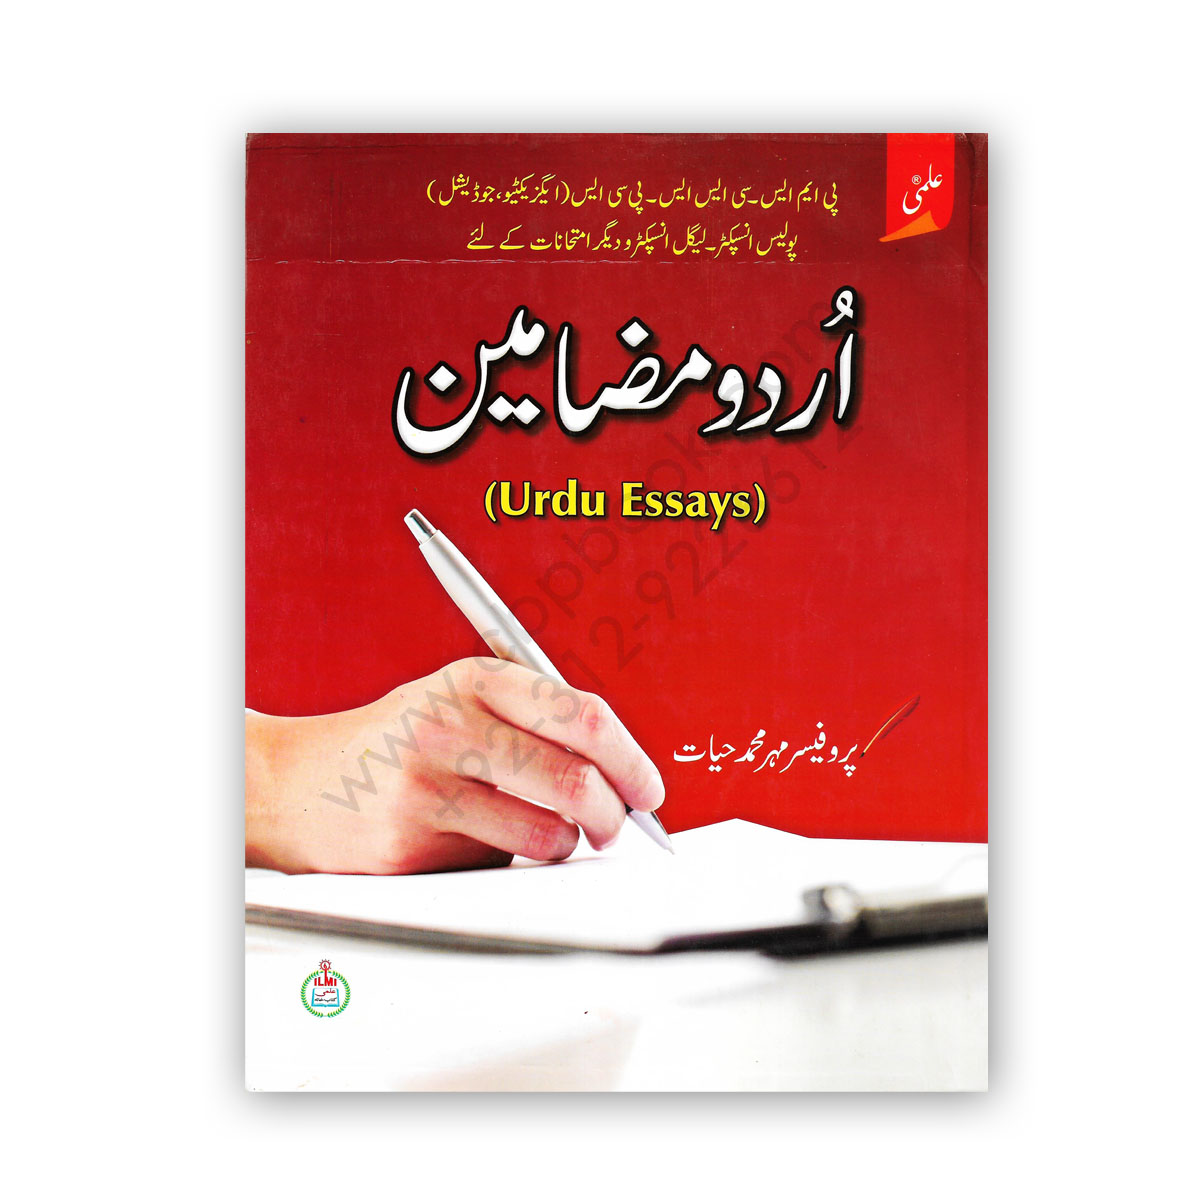 types of essays in urdu